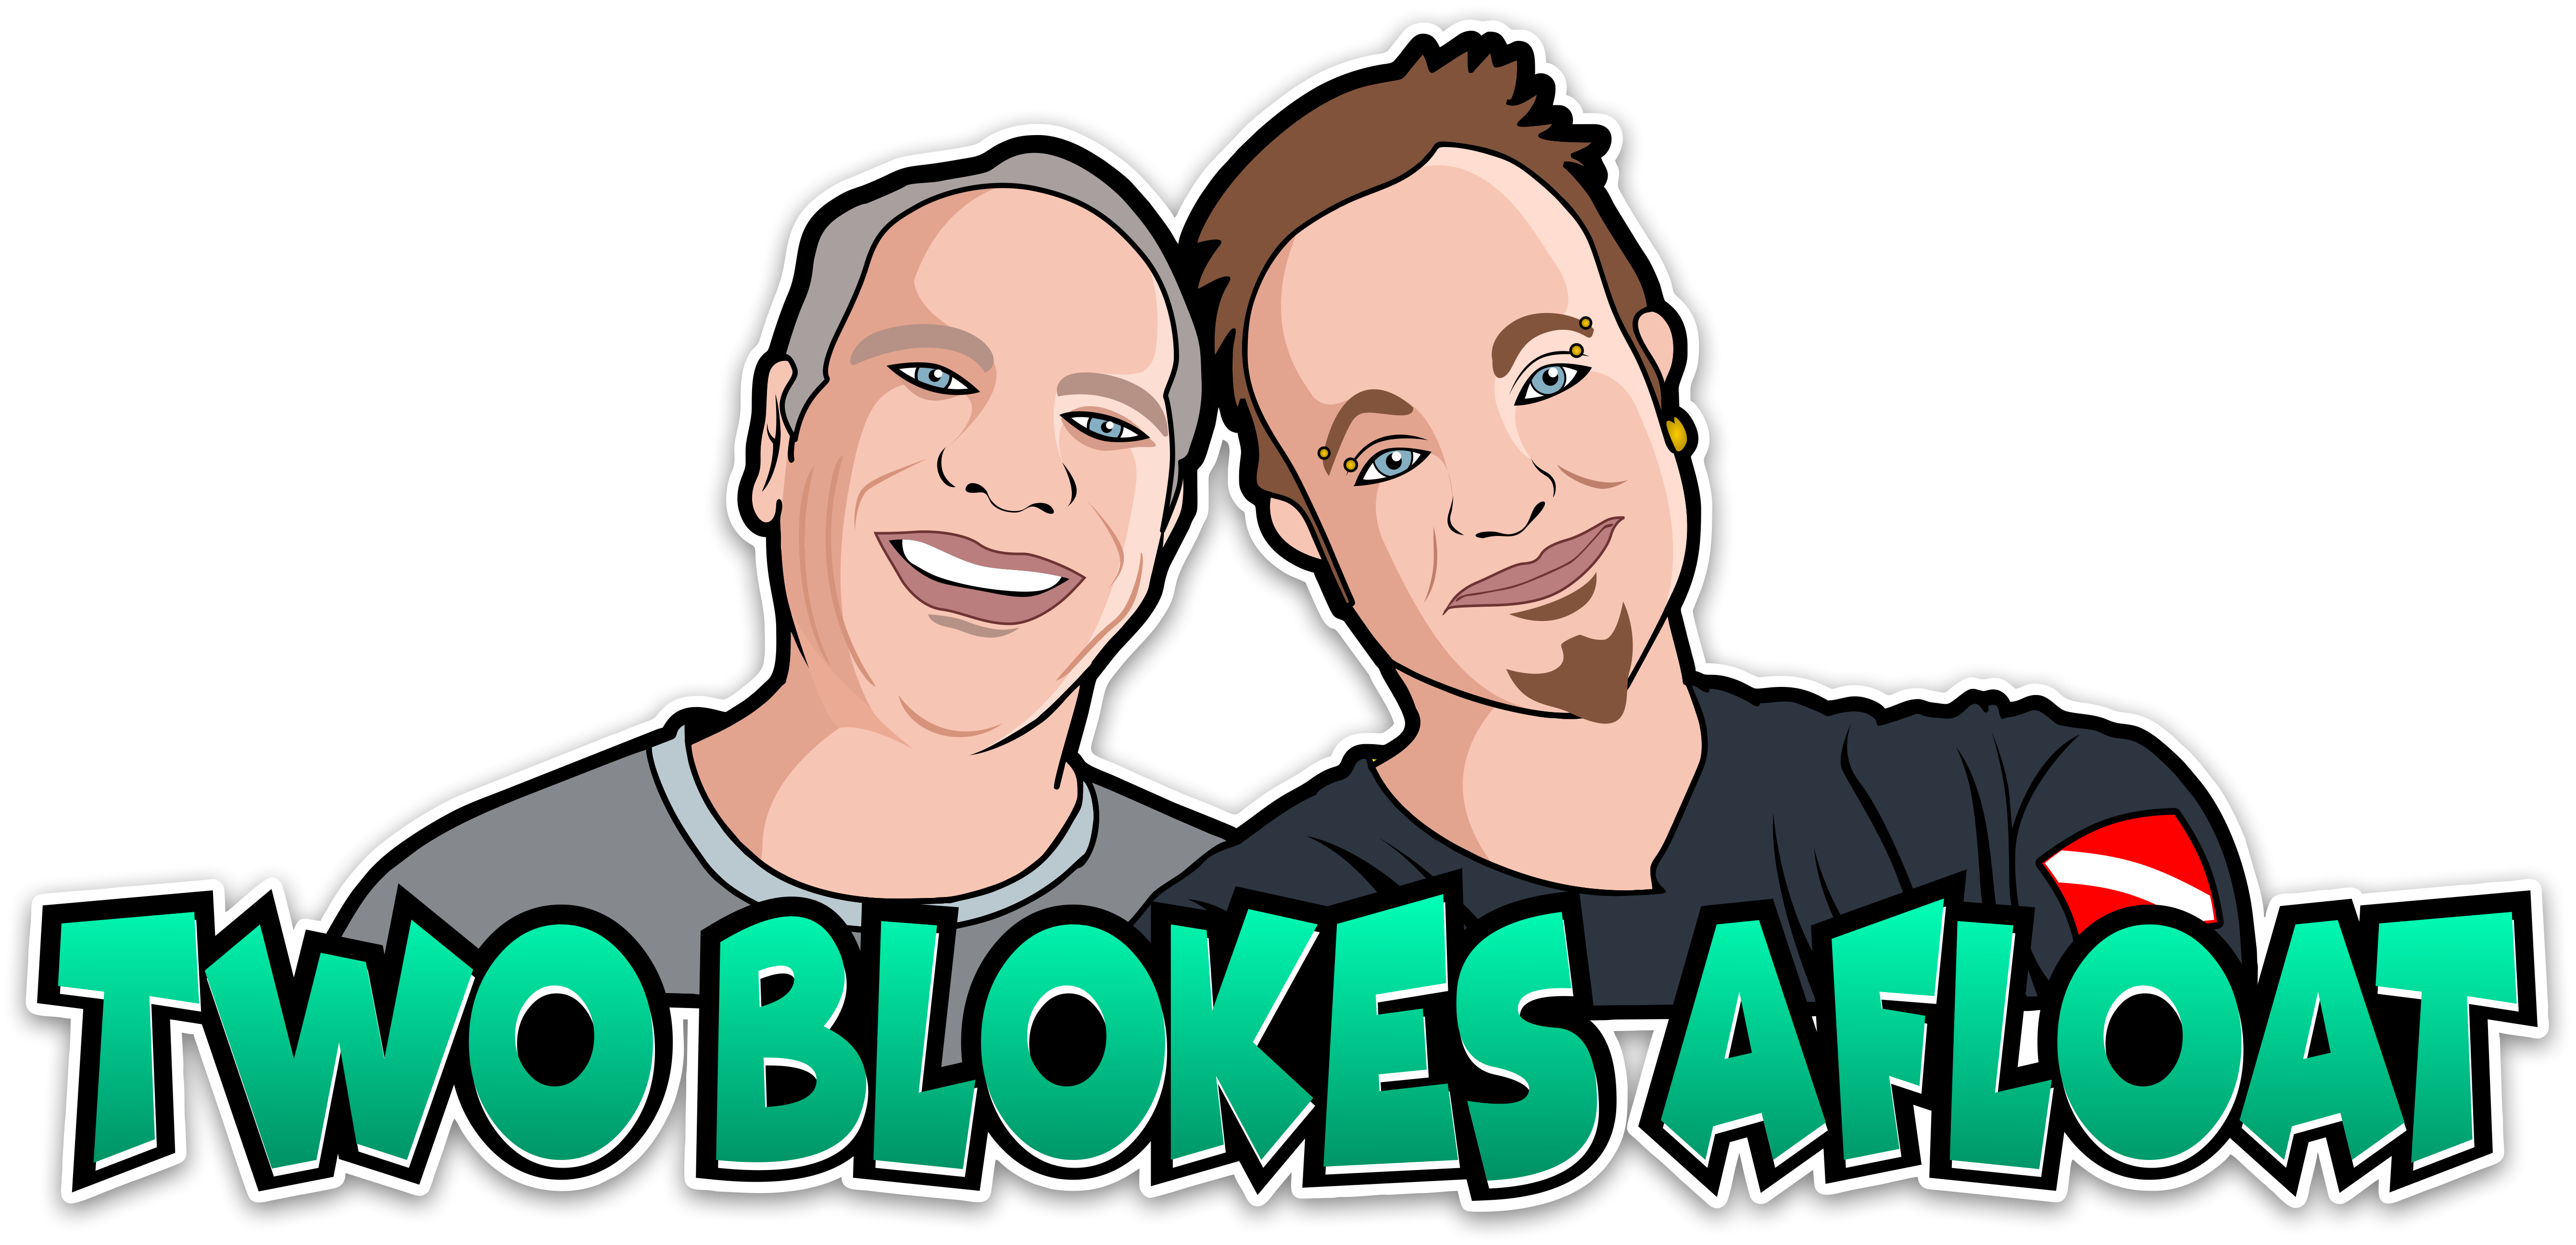 two blokes afloat - logo